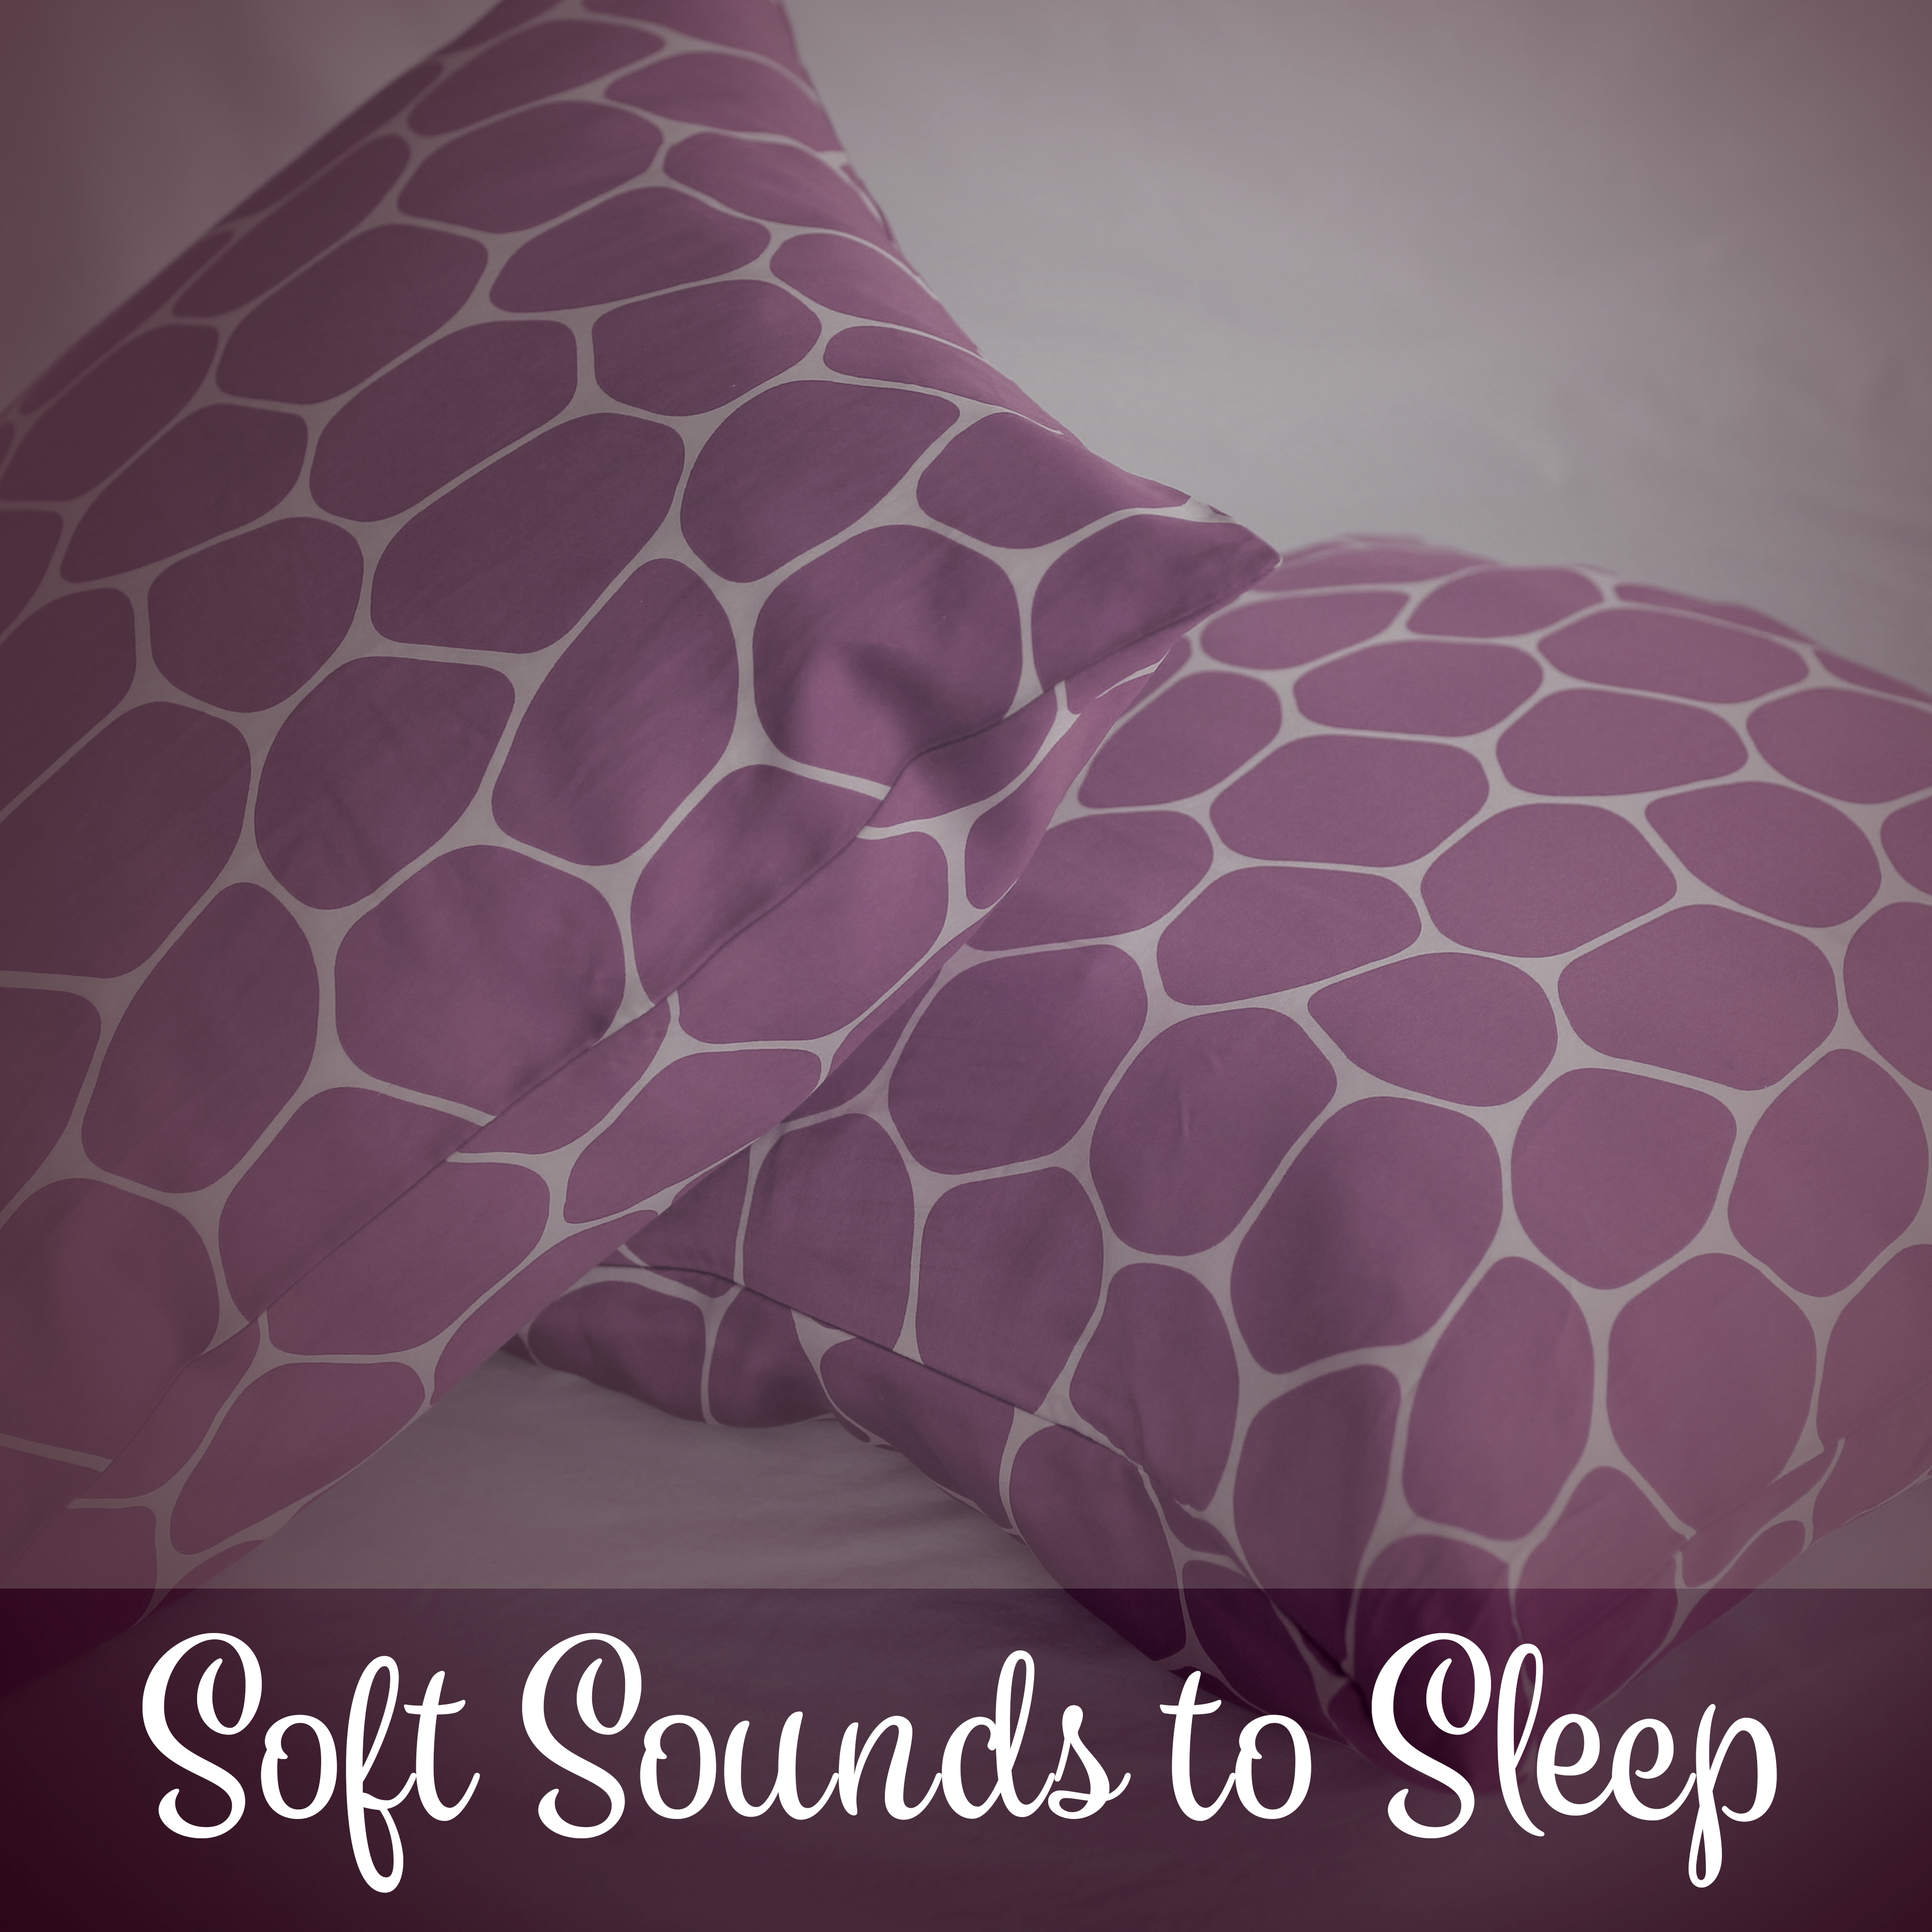 Soft Sounds to Sleep - Wonderland of Dreams, REM Sleep, Stages Sleep, Wonder Imagination, Night Rest